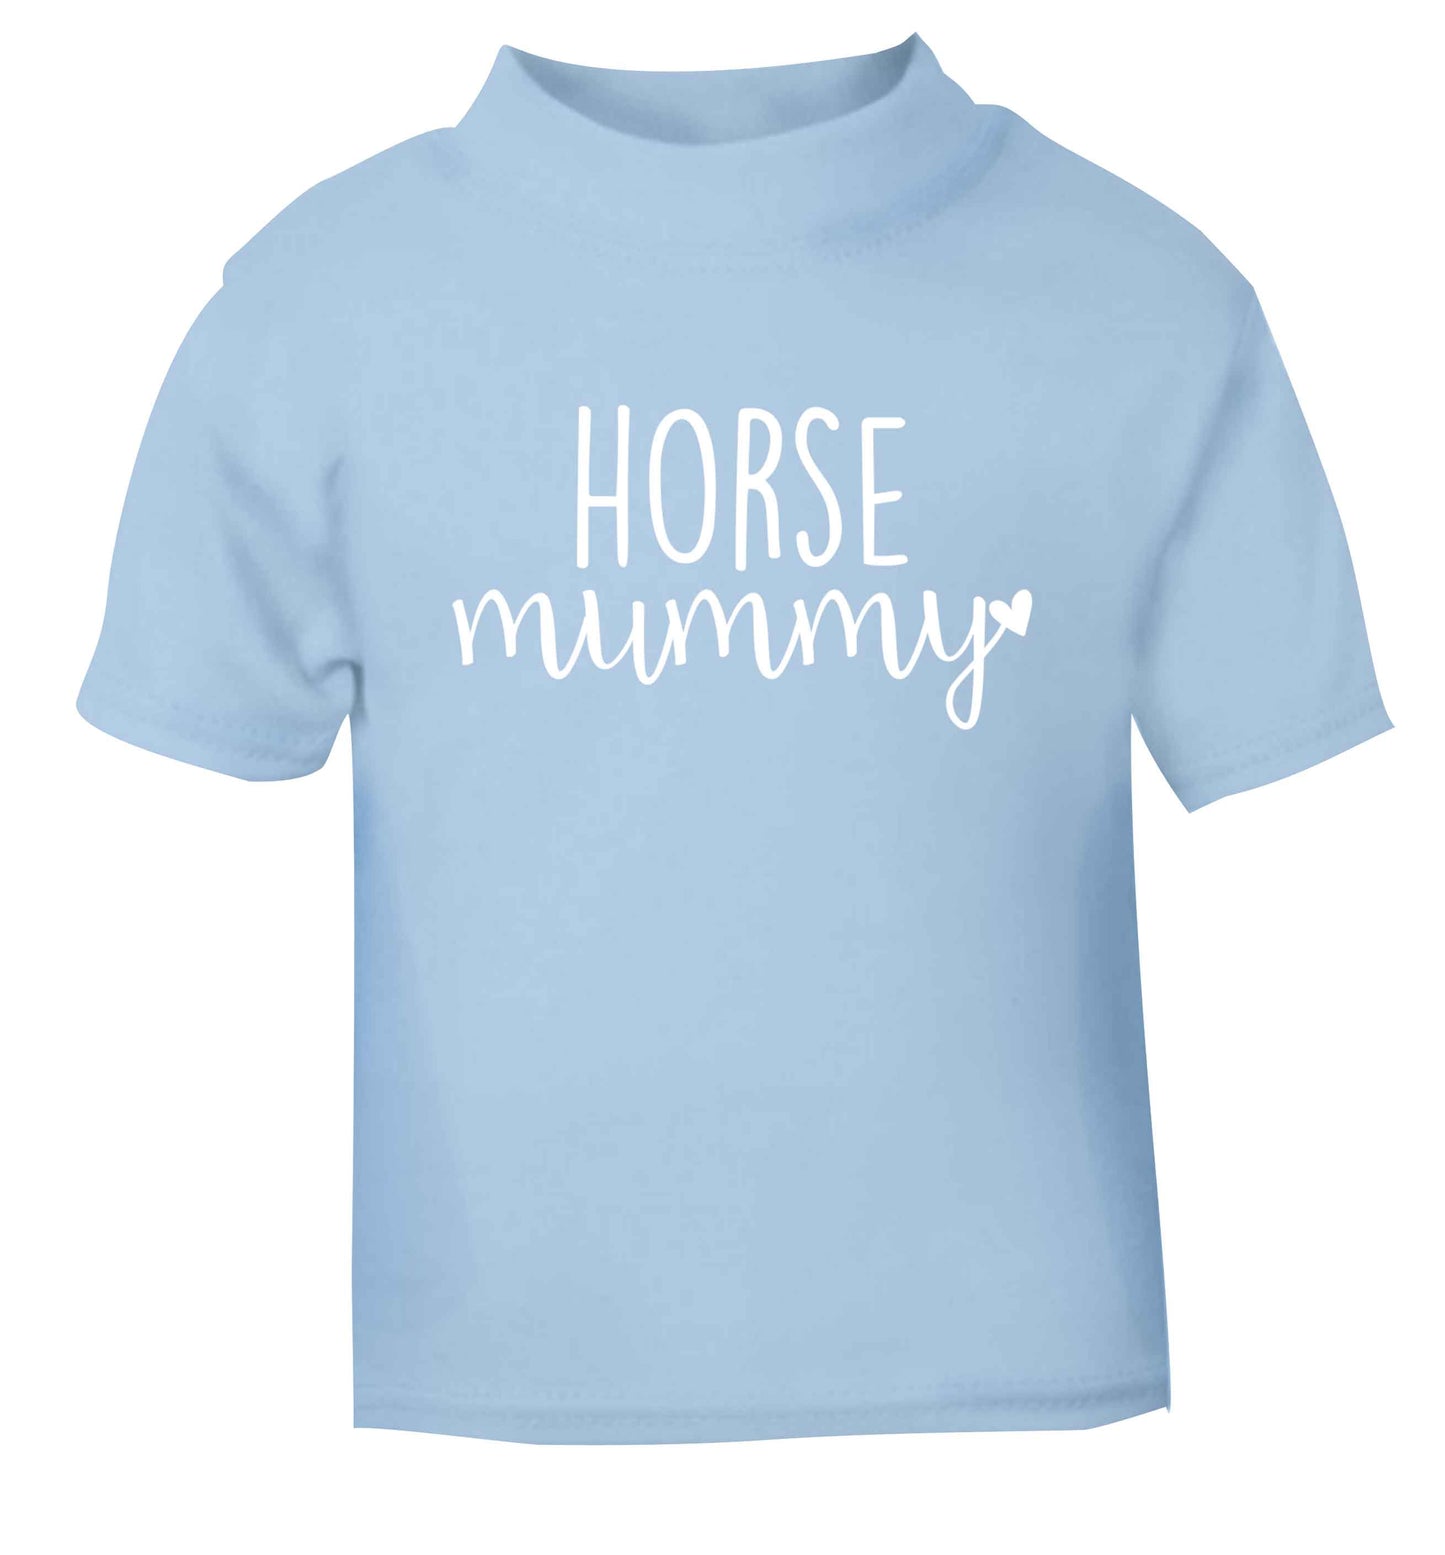 Horse mummy light blue baby toddler Tshirt 2 Years